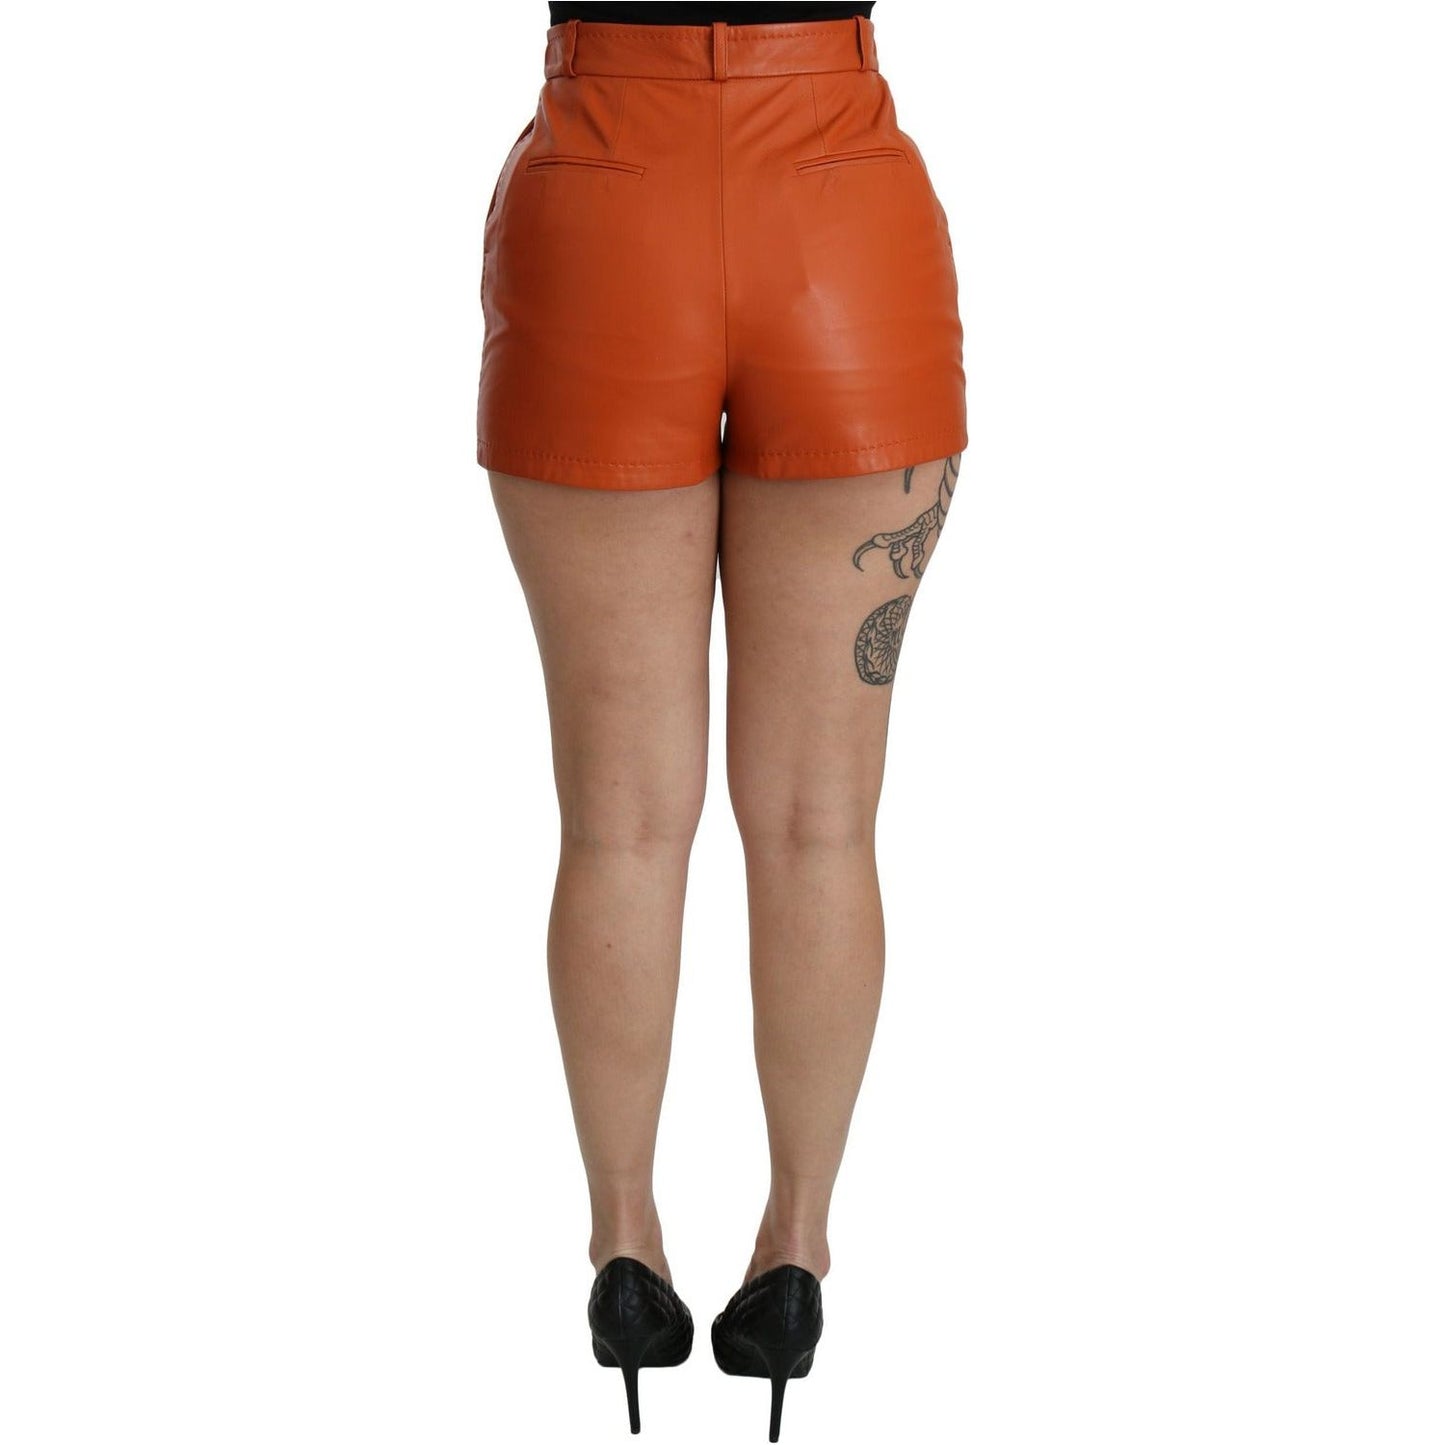 Dolce & Gabbana Orange Leather High Waist Hot Pants Shorts orange-leather-high-waist-hot-pants-shorts Shorts IMG_2964-2-scaled-25970163-186.jpg